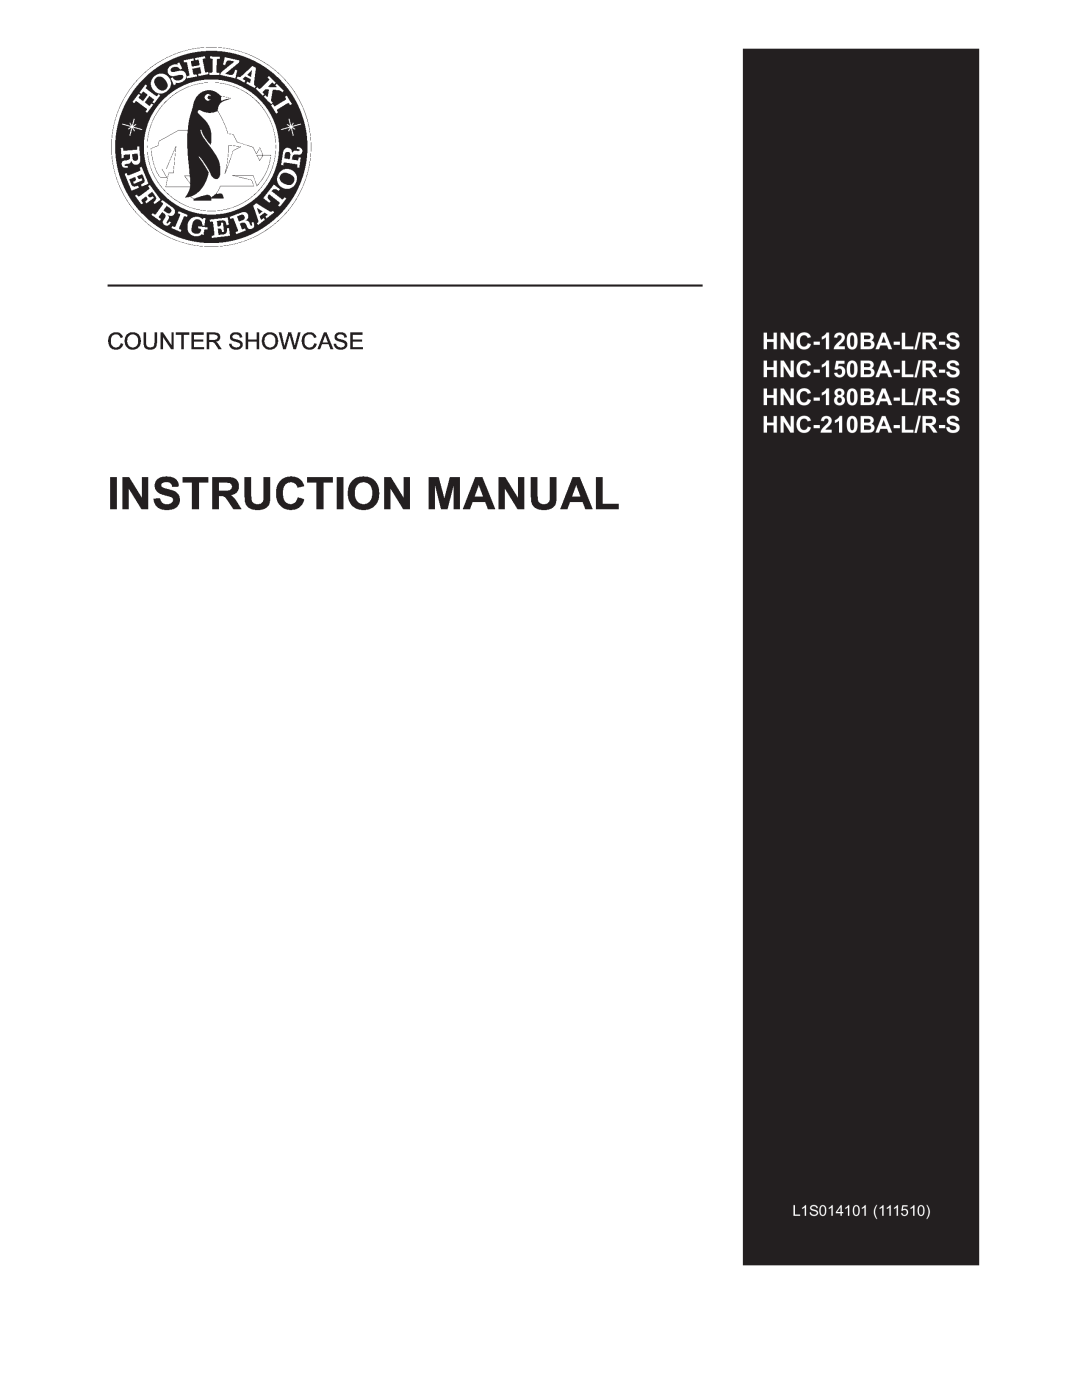 Hoshizaki HNC-150BA-L/R-S, HNC-210BA-L/R-S, HNC-120BA-L/R-S, HNC-180BA-L/R-S instruction manual Counter Showcase, L1S014101 